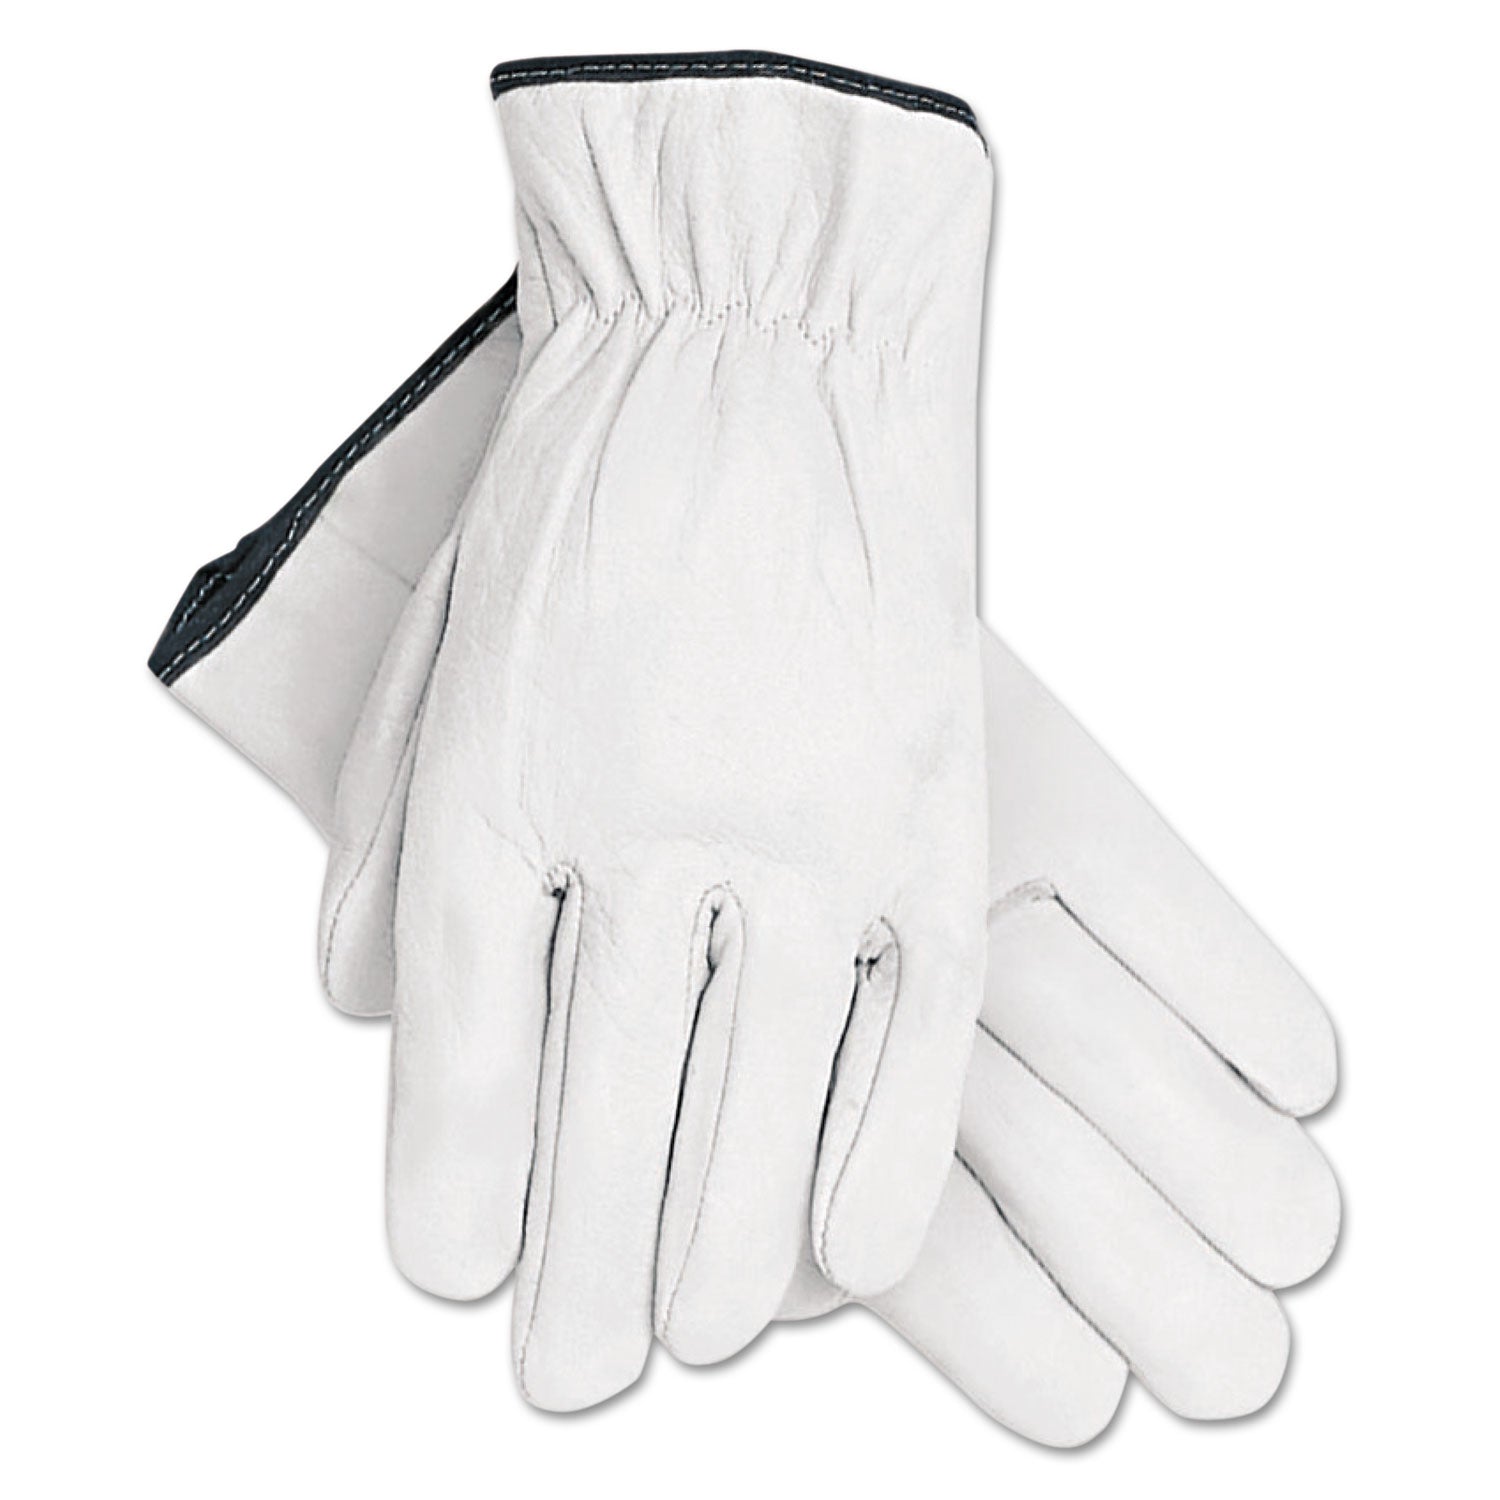 Grain Goatskin Driver Gloves, White, X-Large, 12 Pairs - 